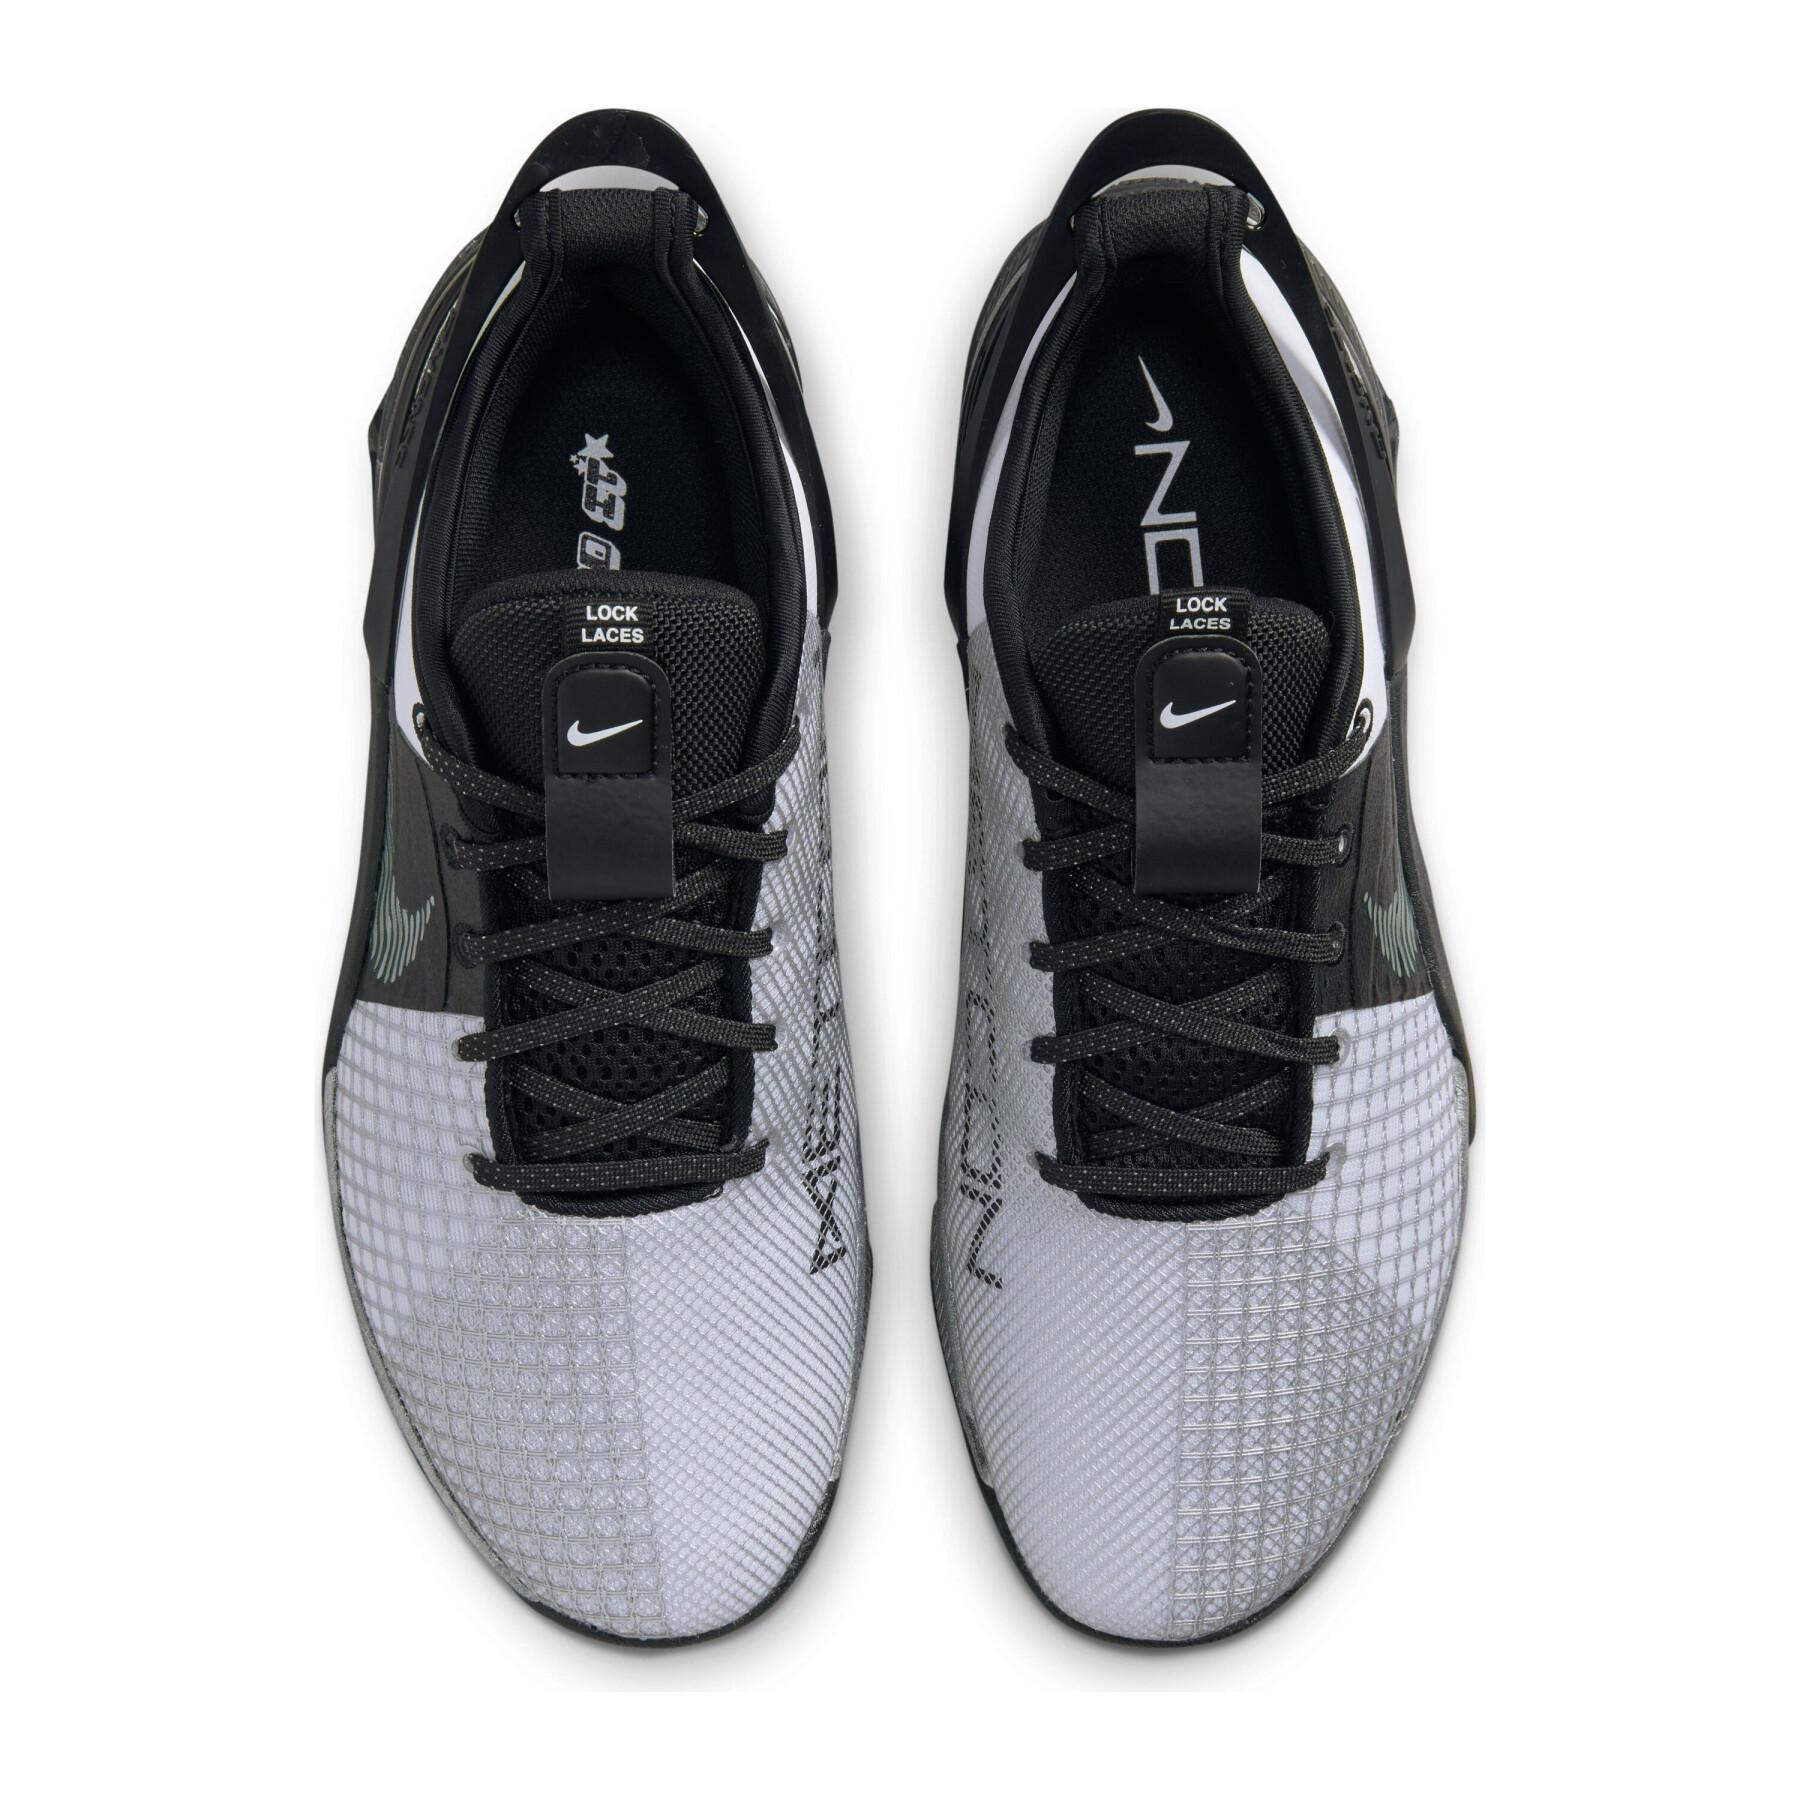 Women's cross training shoes Nike Metcon 8 Fly Ease Premium